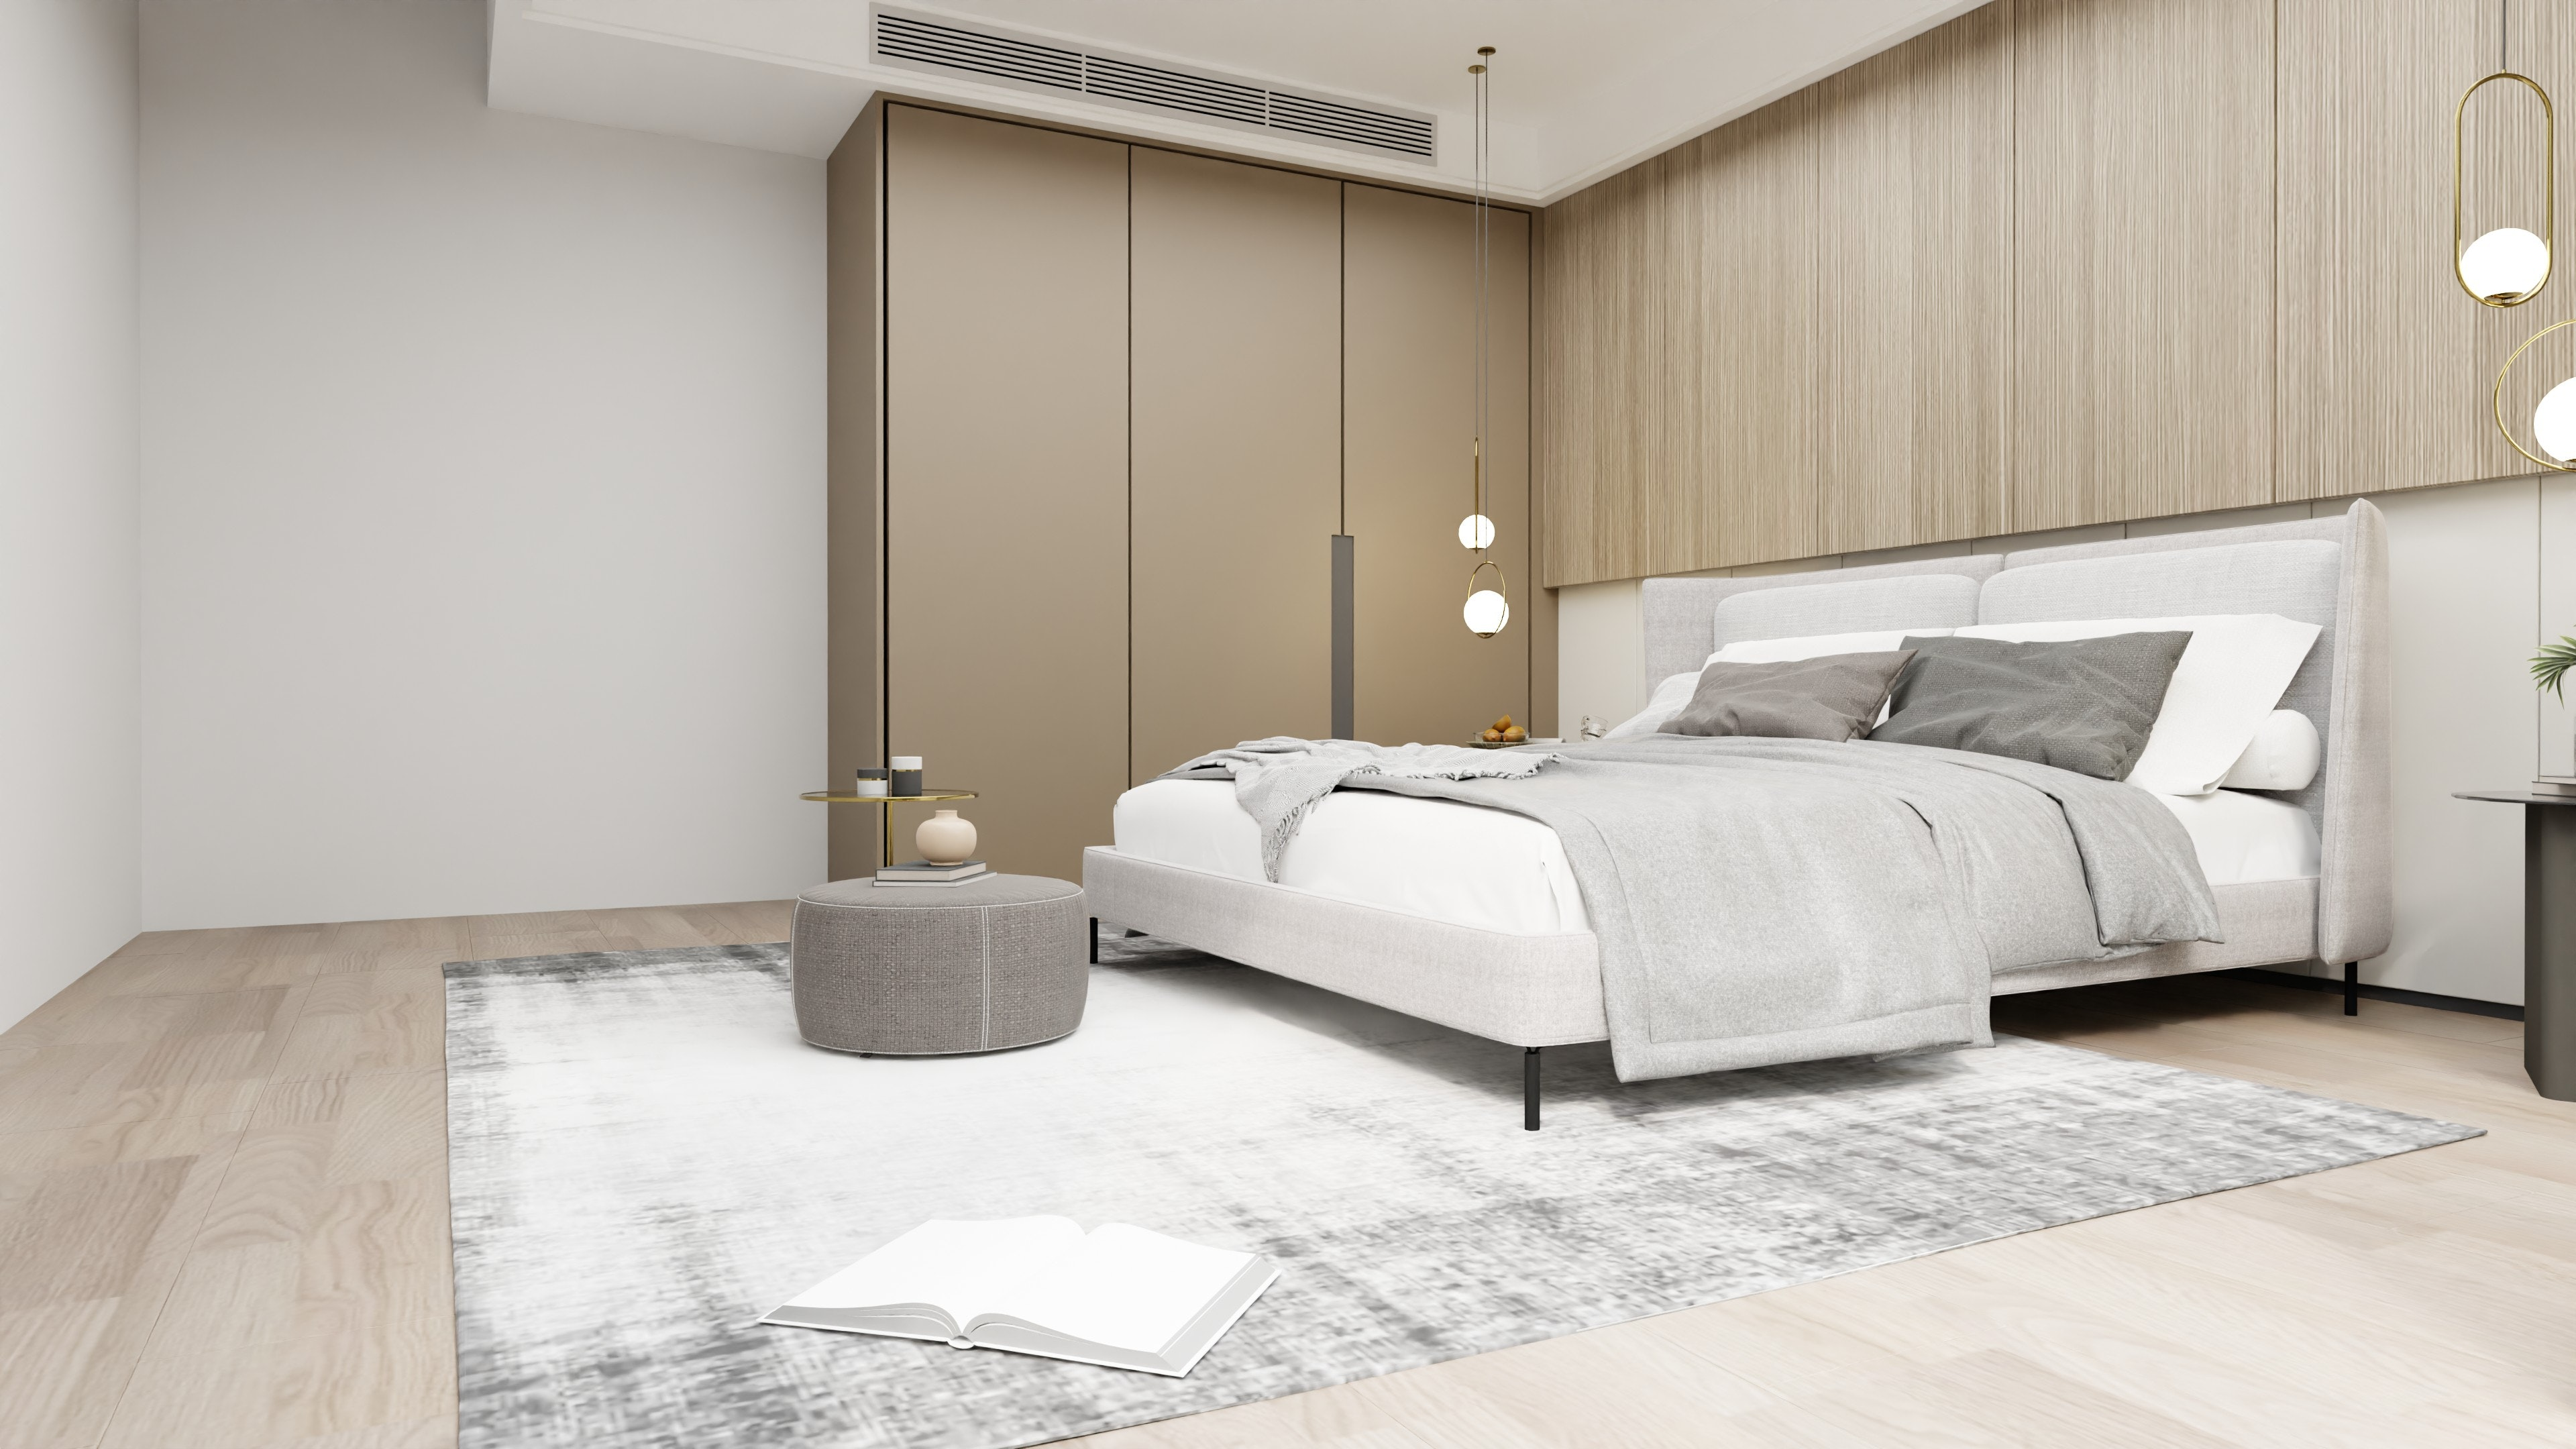 Image credit: https://www.pexels.com/photo/minimal-interior-design-of-a-bedroom-12277278/